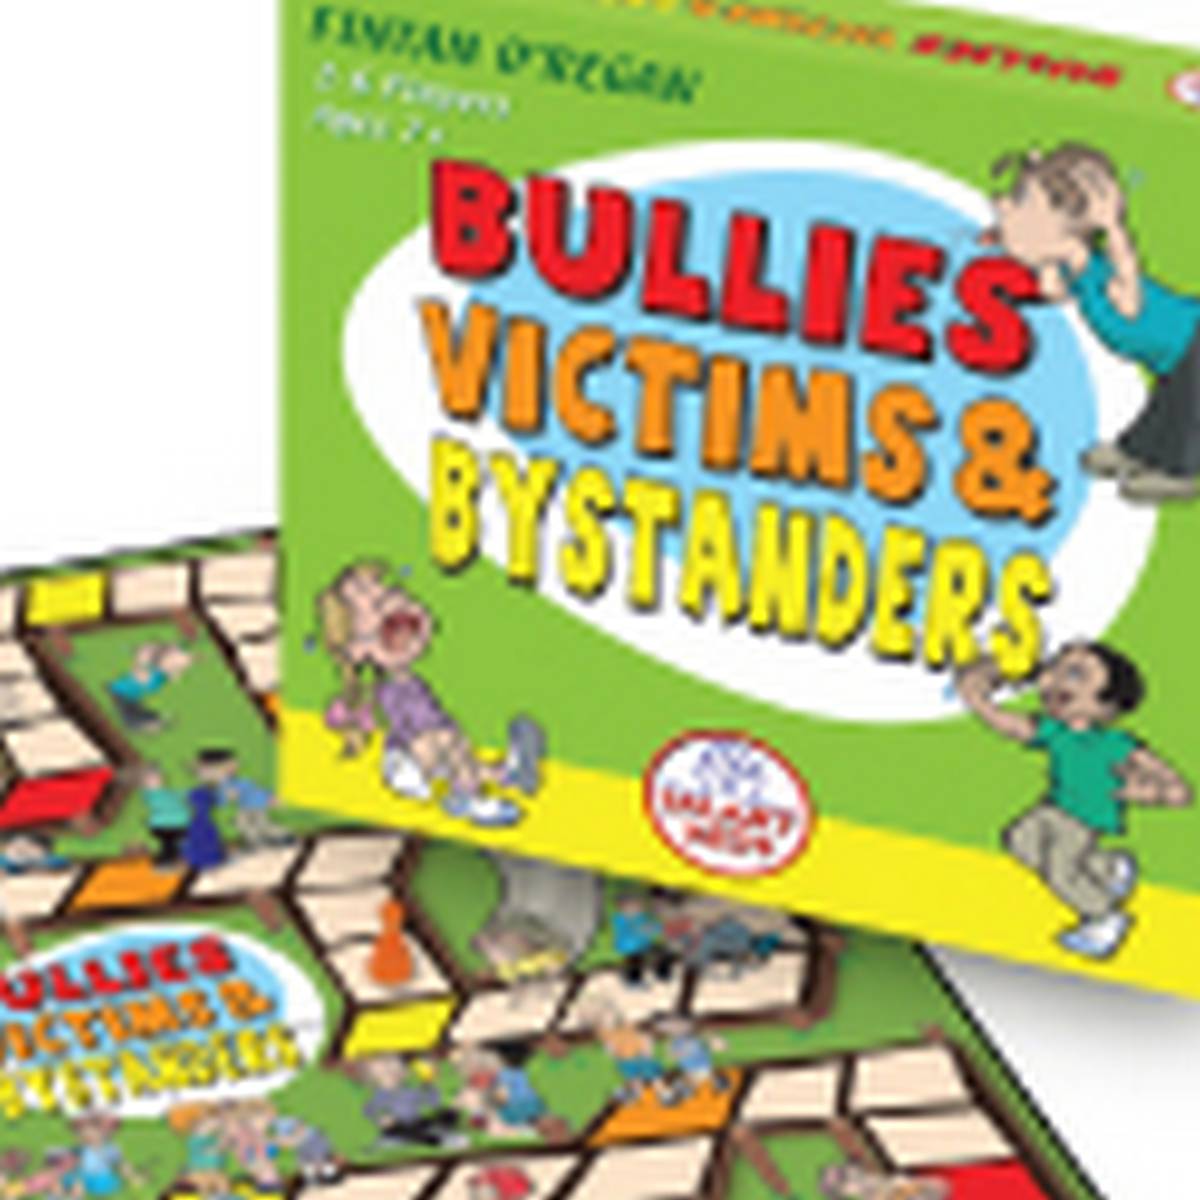 Bullies, Victims & Bystanders Game